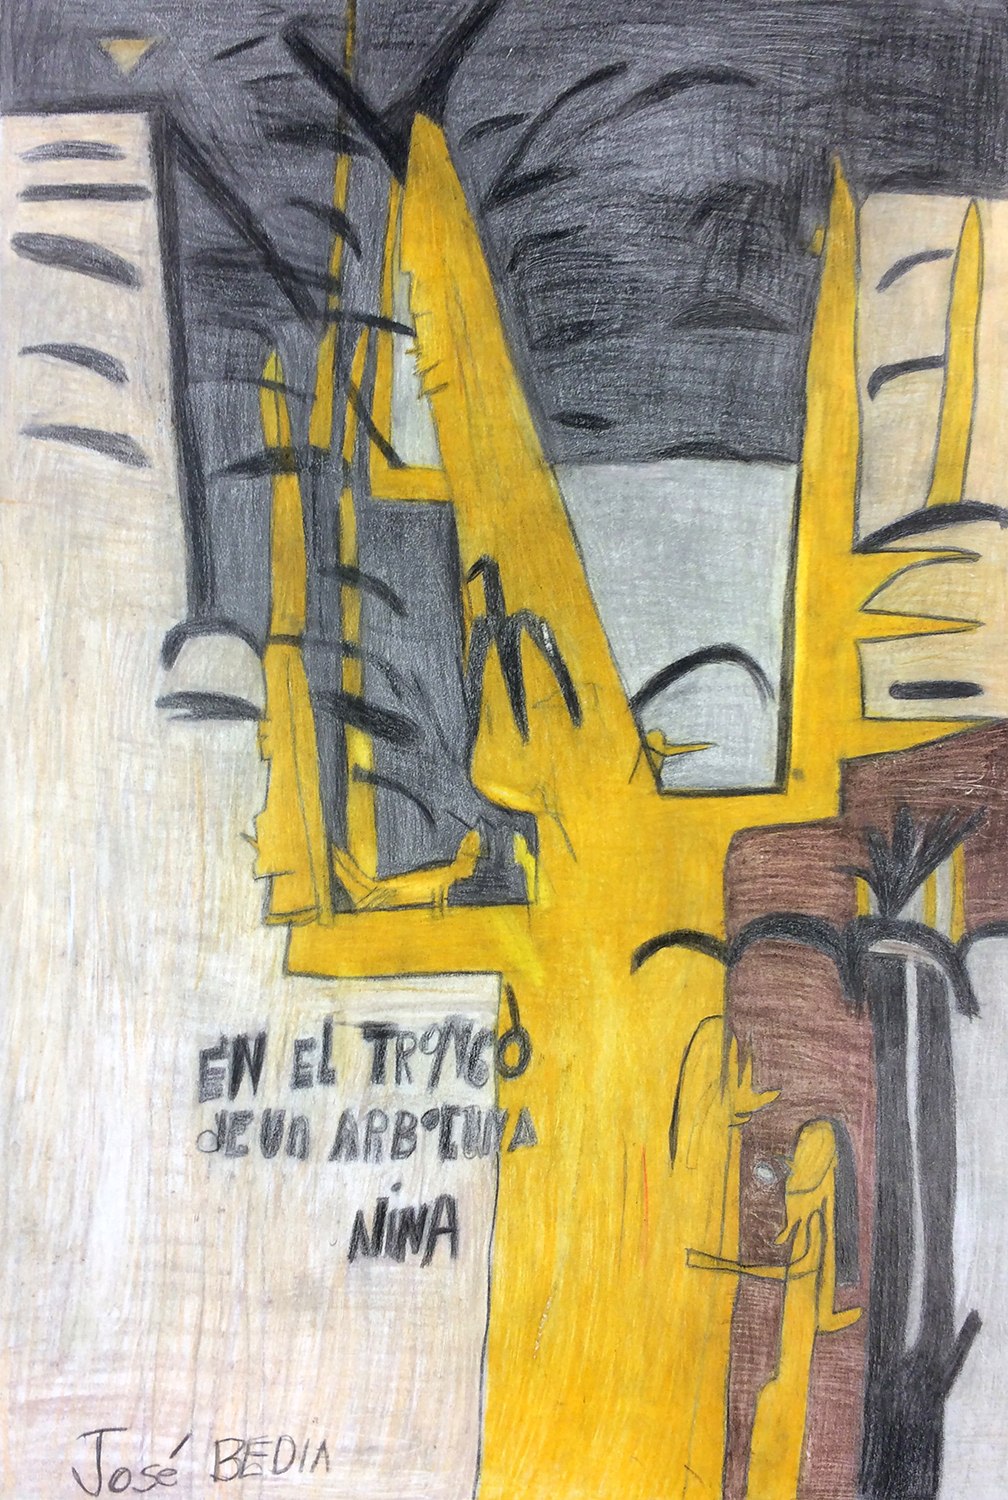 Andrew Hostick, Jose Bedia En El Tronco De Un Arbol Una Nina 1999, 2012&nbsp;